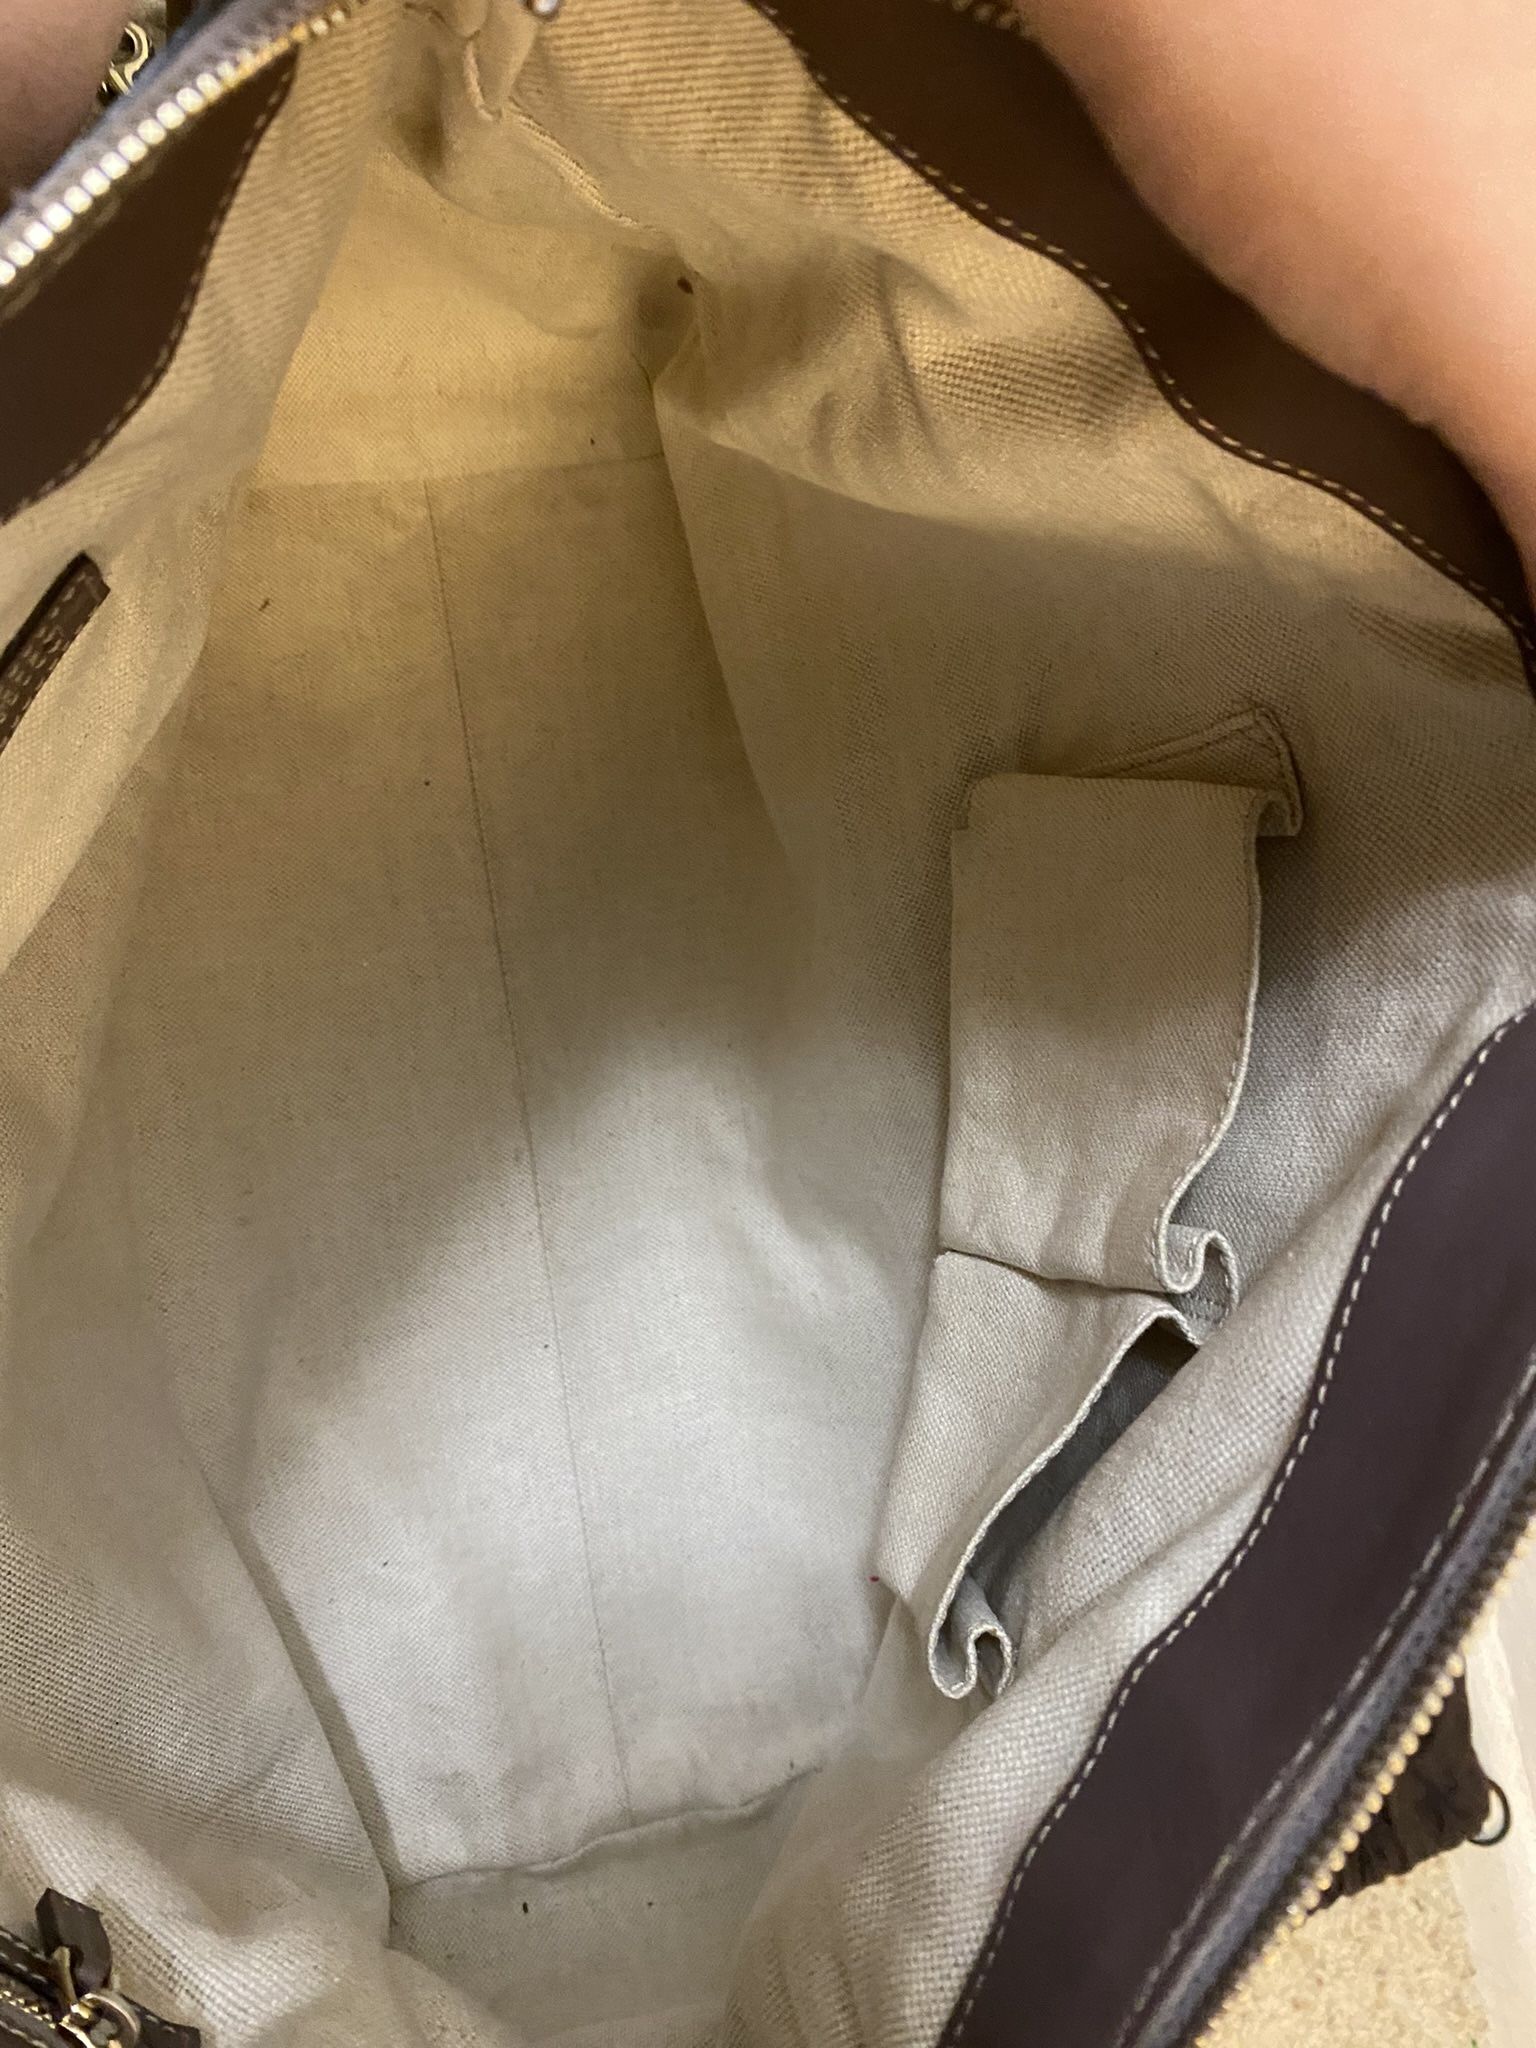 Gucci Controllato Shoulder Bag for Sale in Fullerton, CA - OfferUp